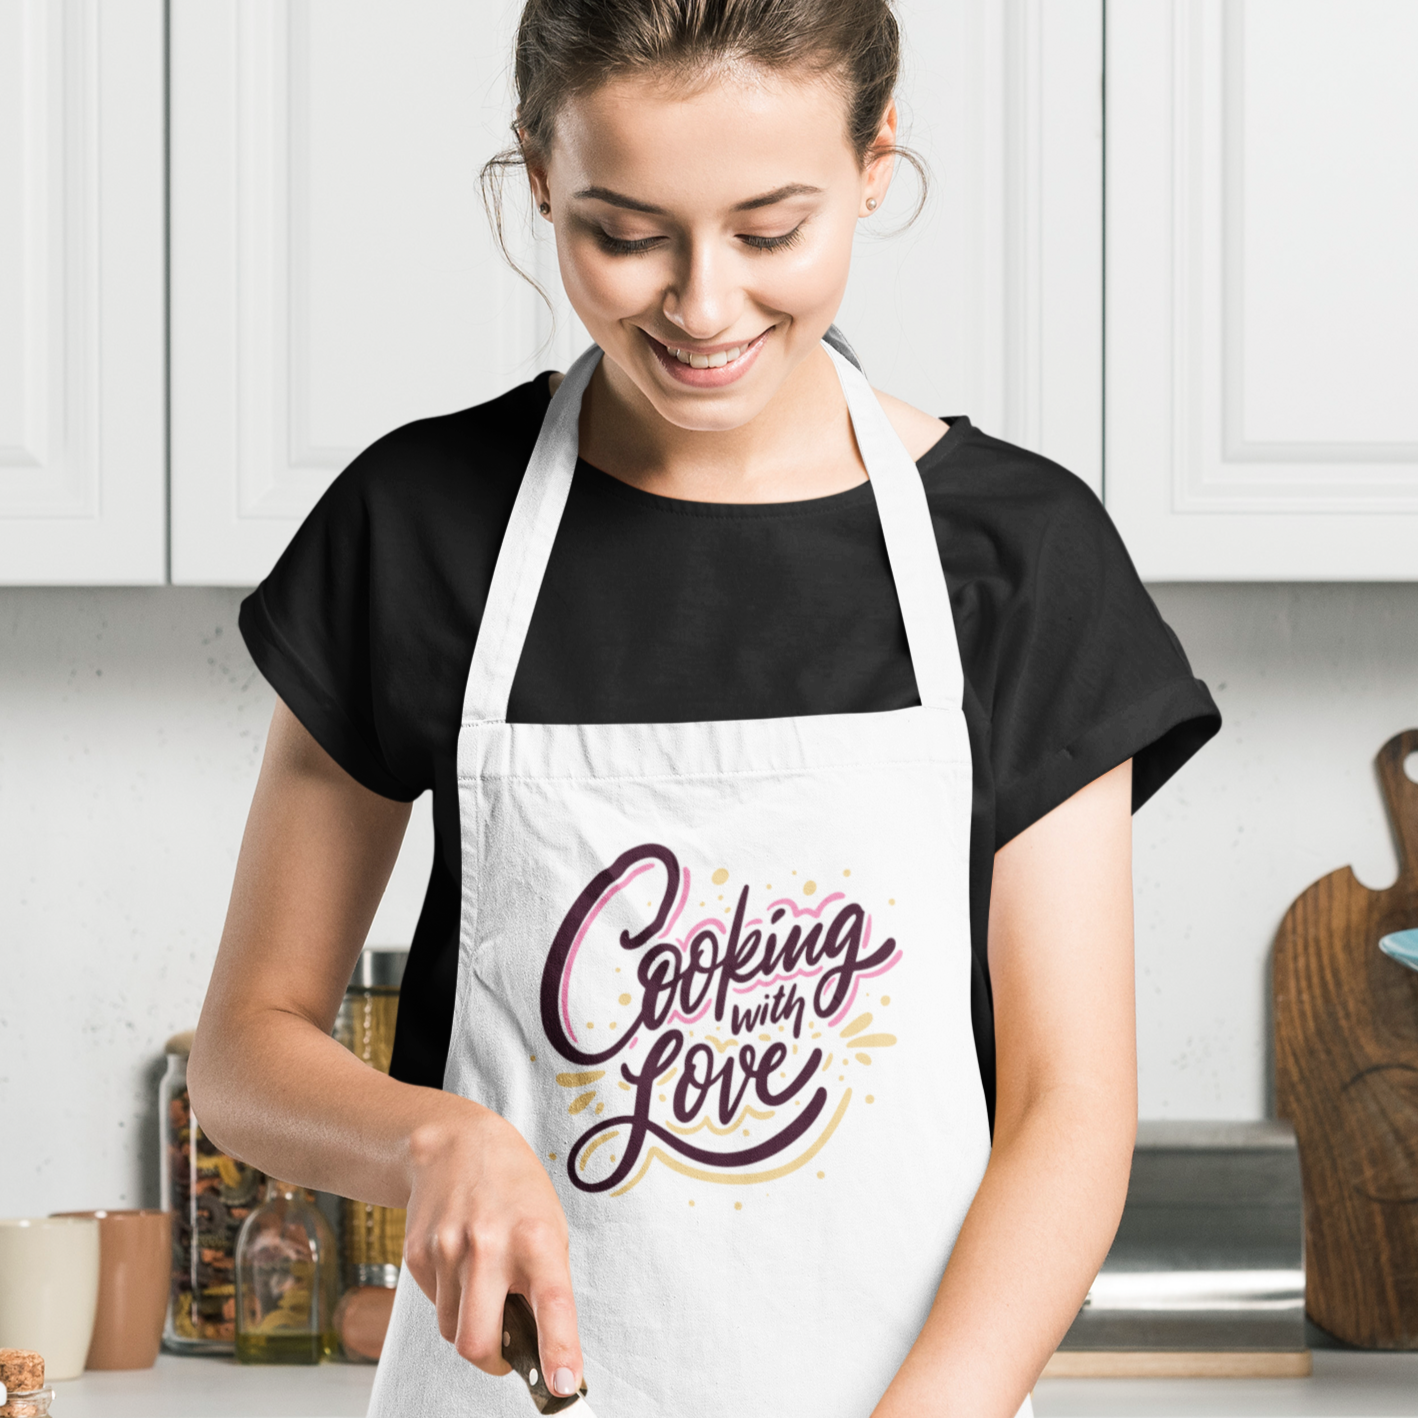 Delantal de cocina "Cooking with Love" Niño, Blanco. Envío gratis a Península.